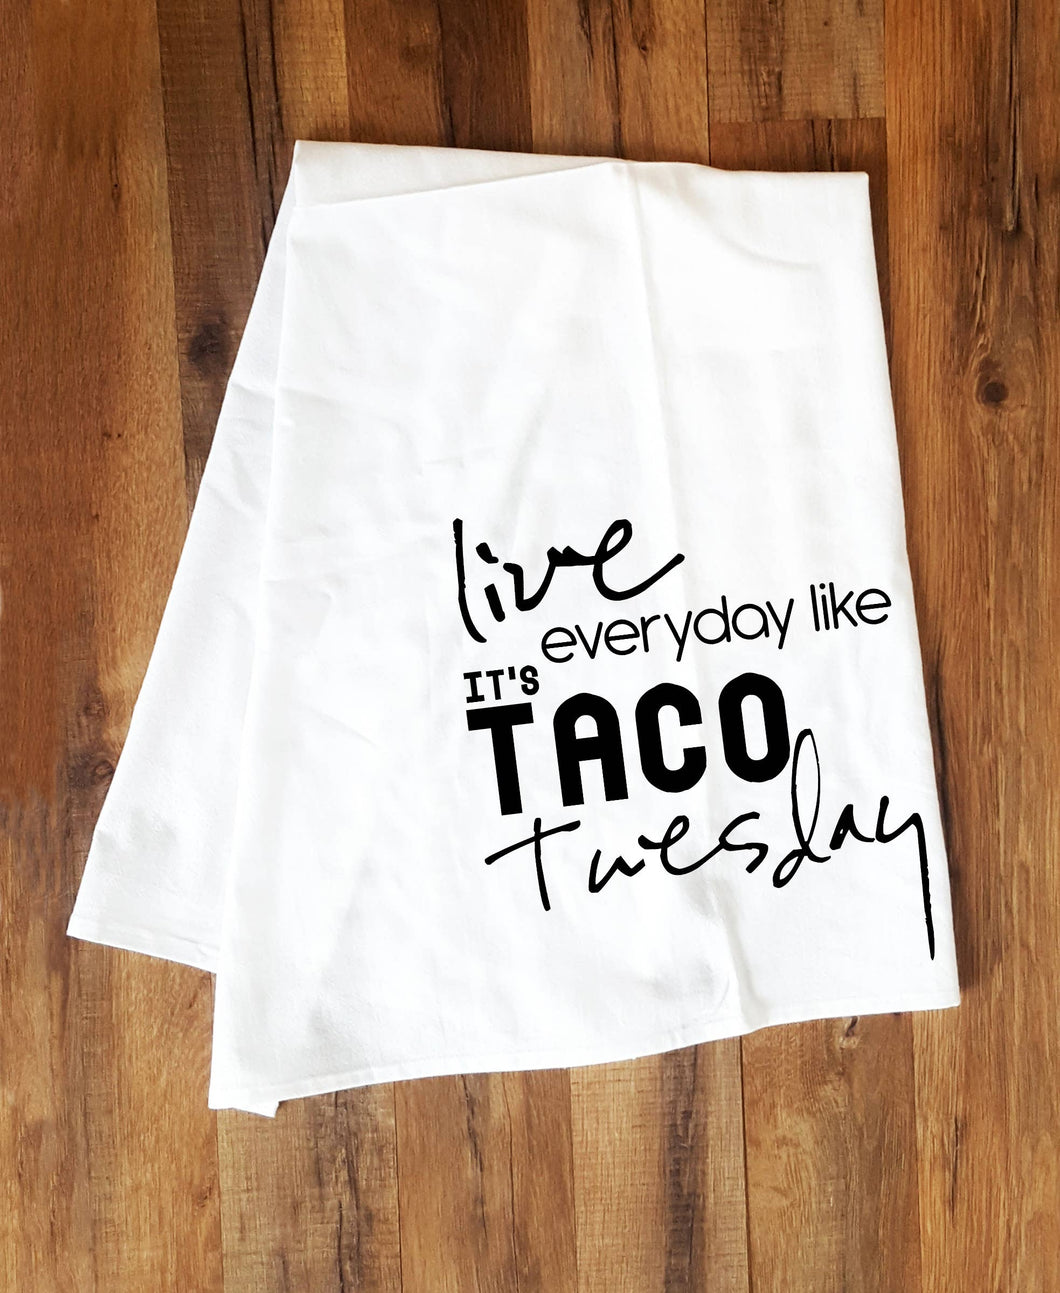 Taco Tuesday Tea Towel